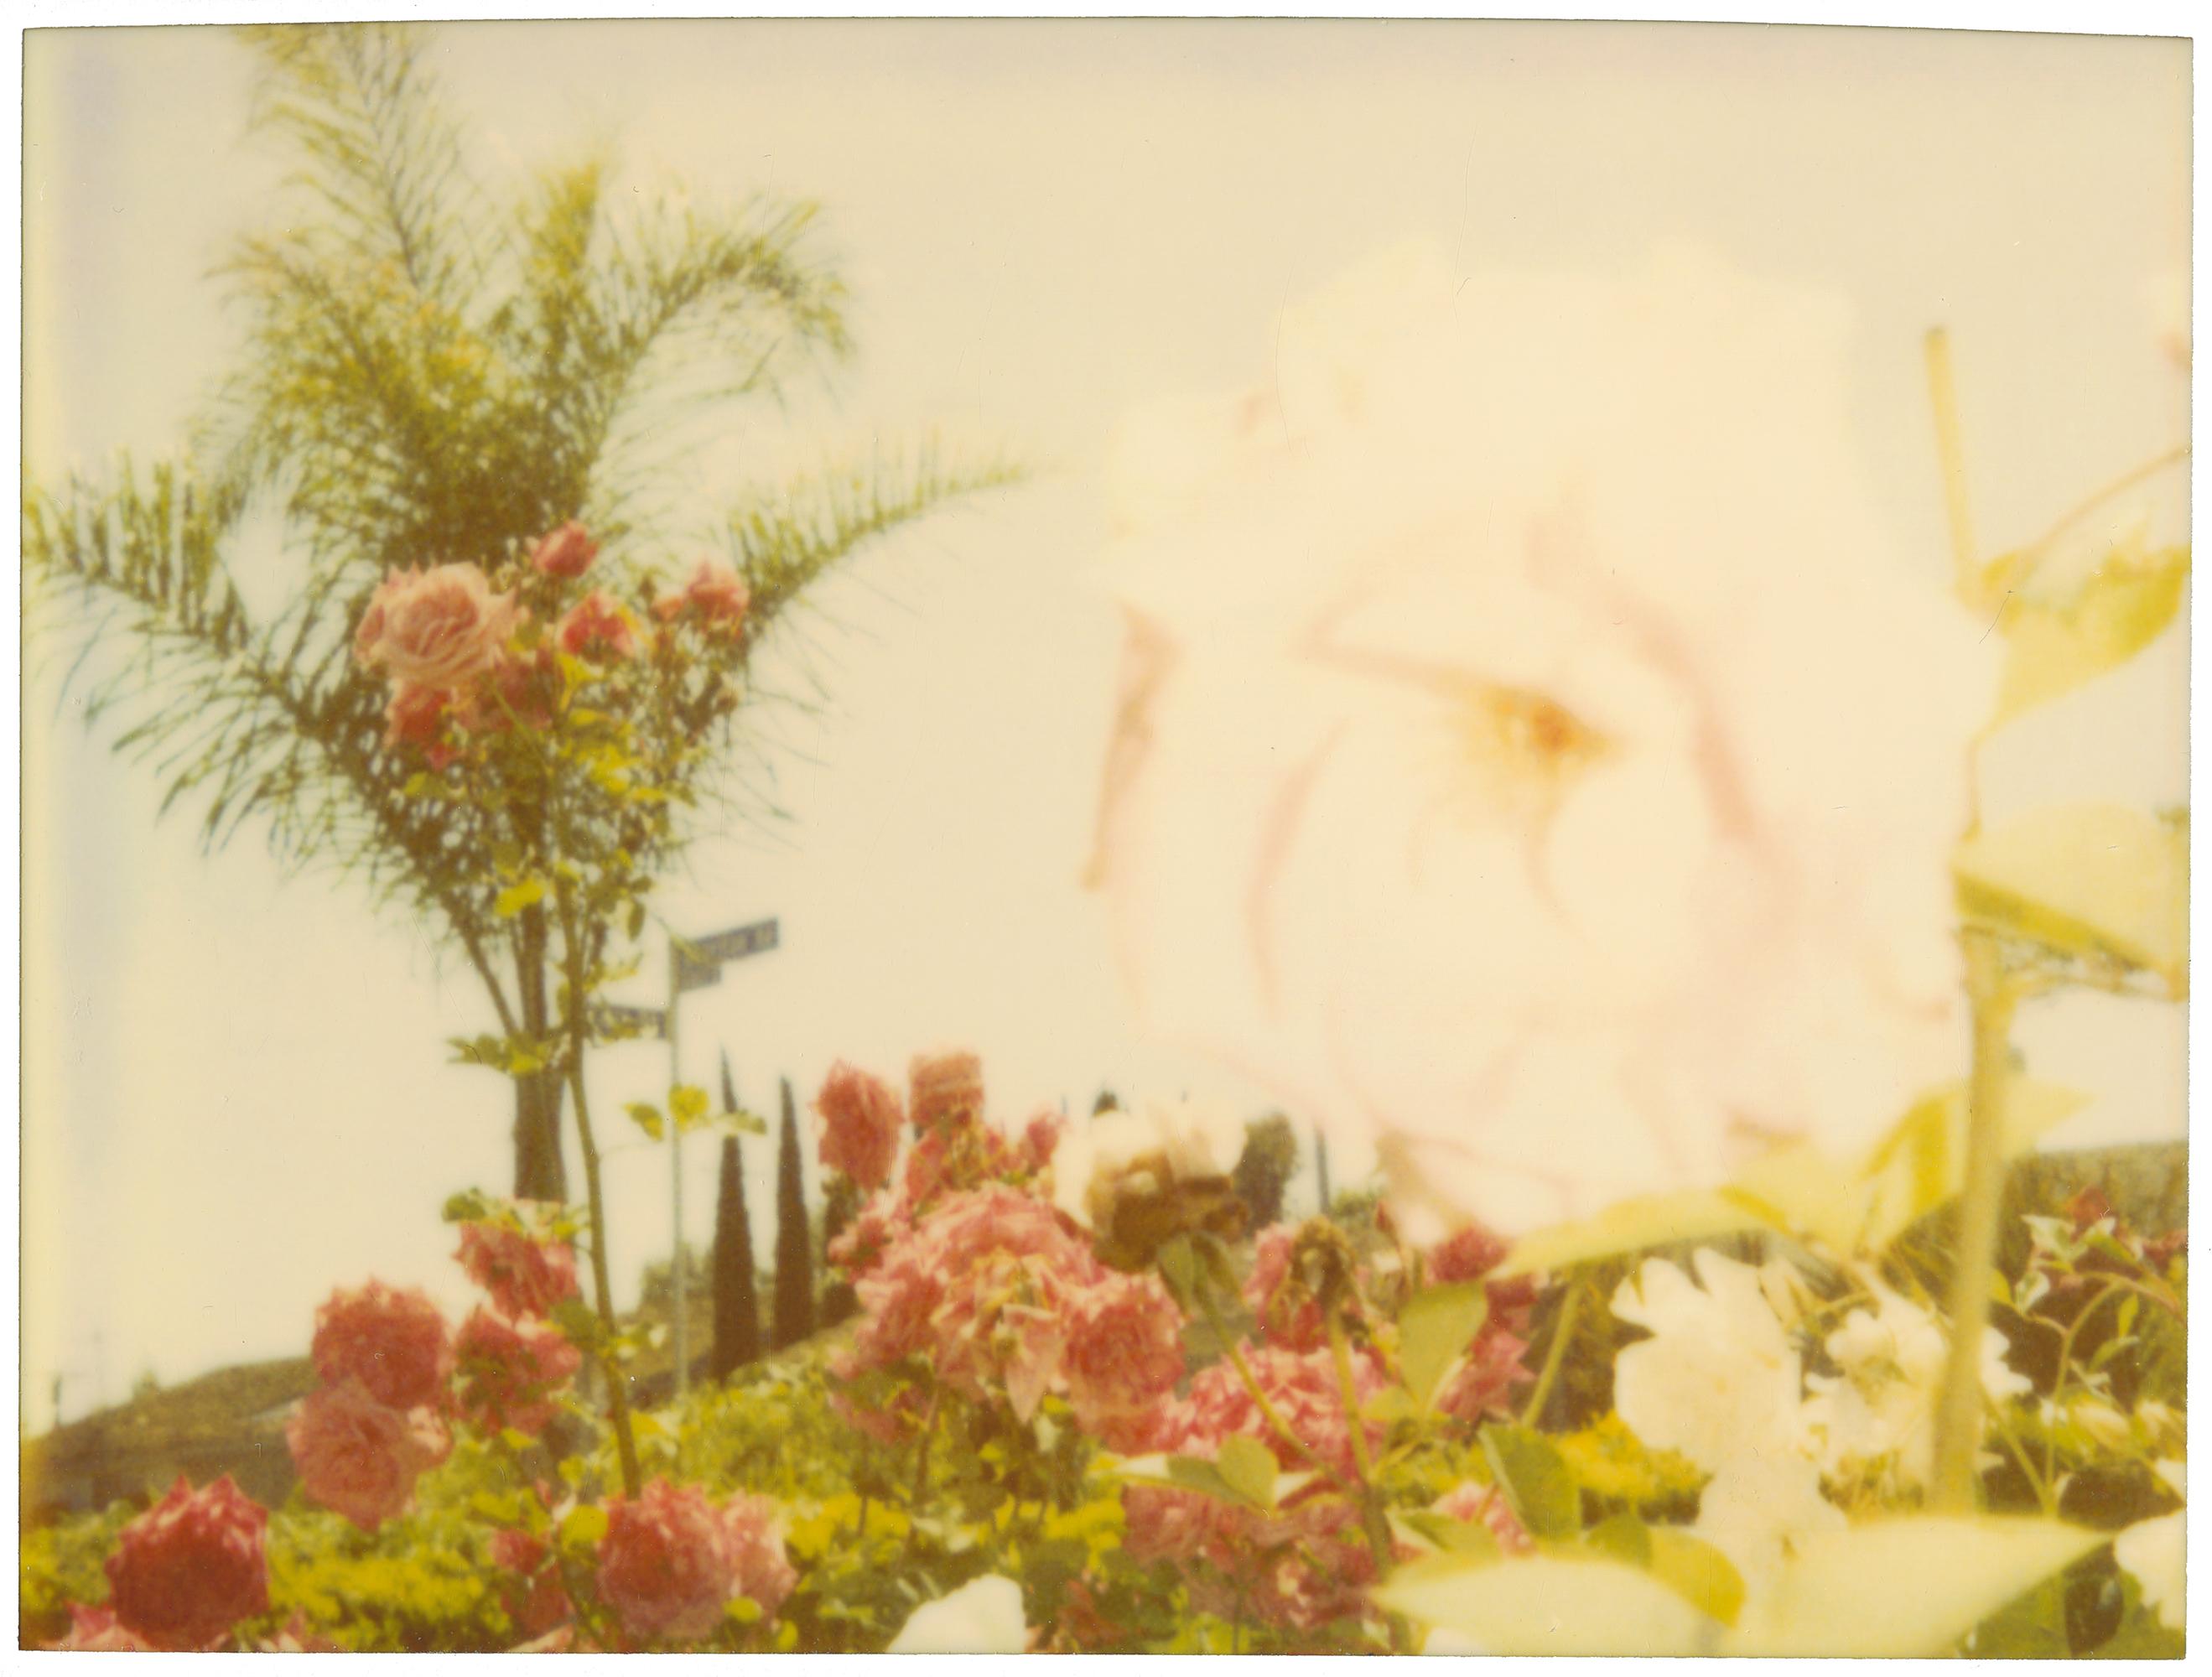 Stefanie Schneider Landscape Photograph - Pink Rose (Suburbia), analog, mounted